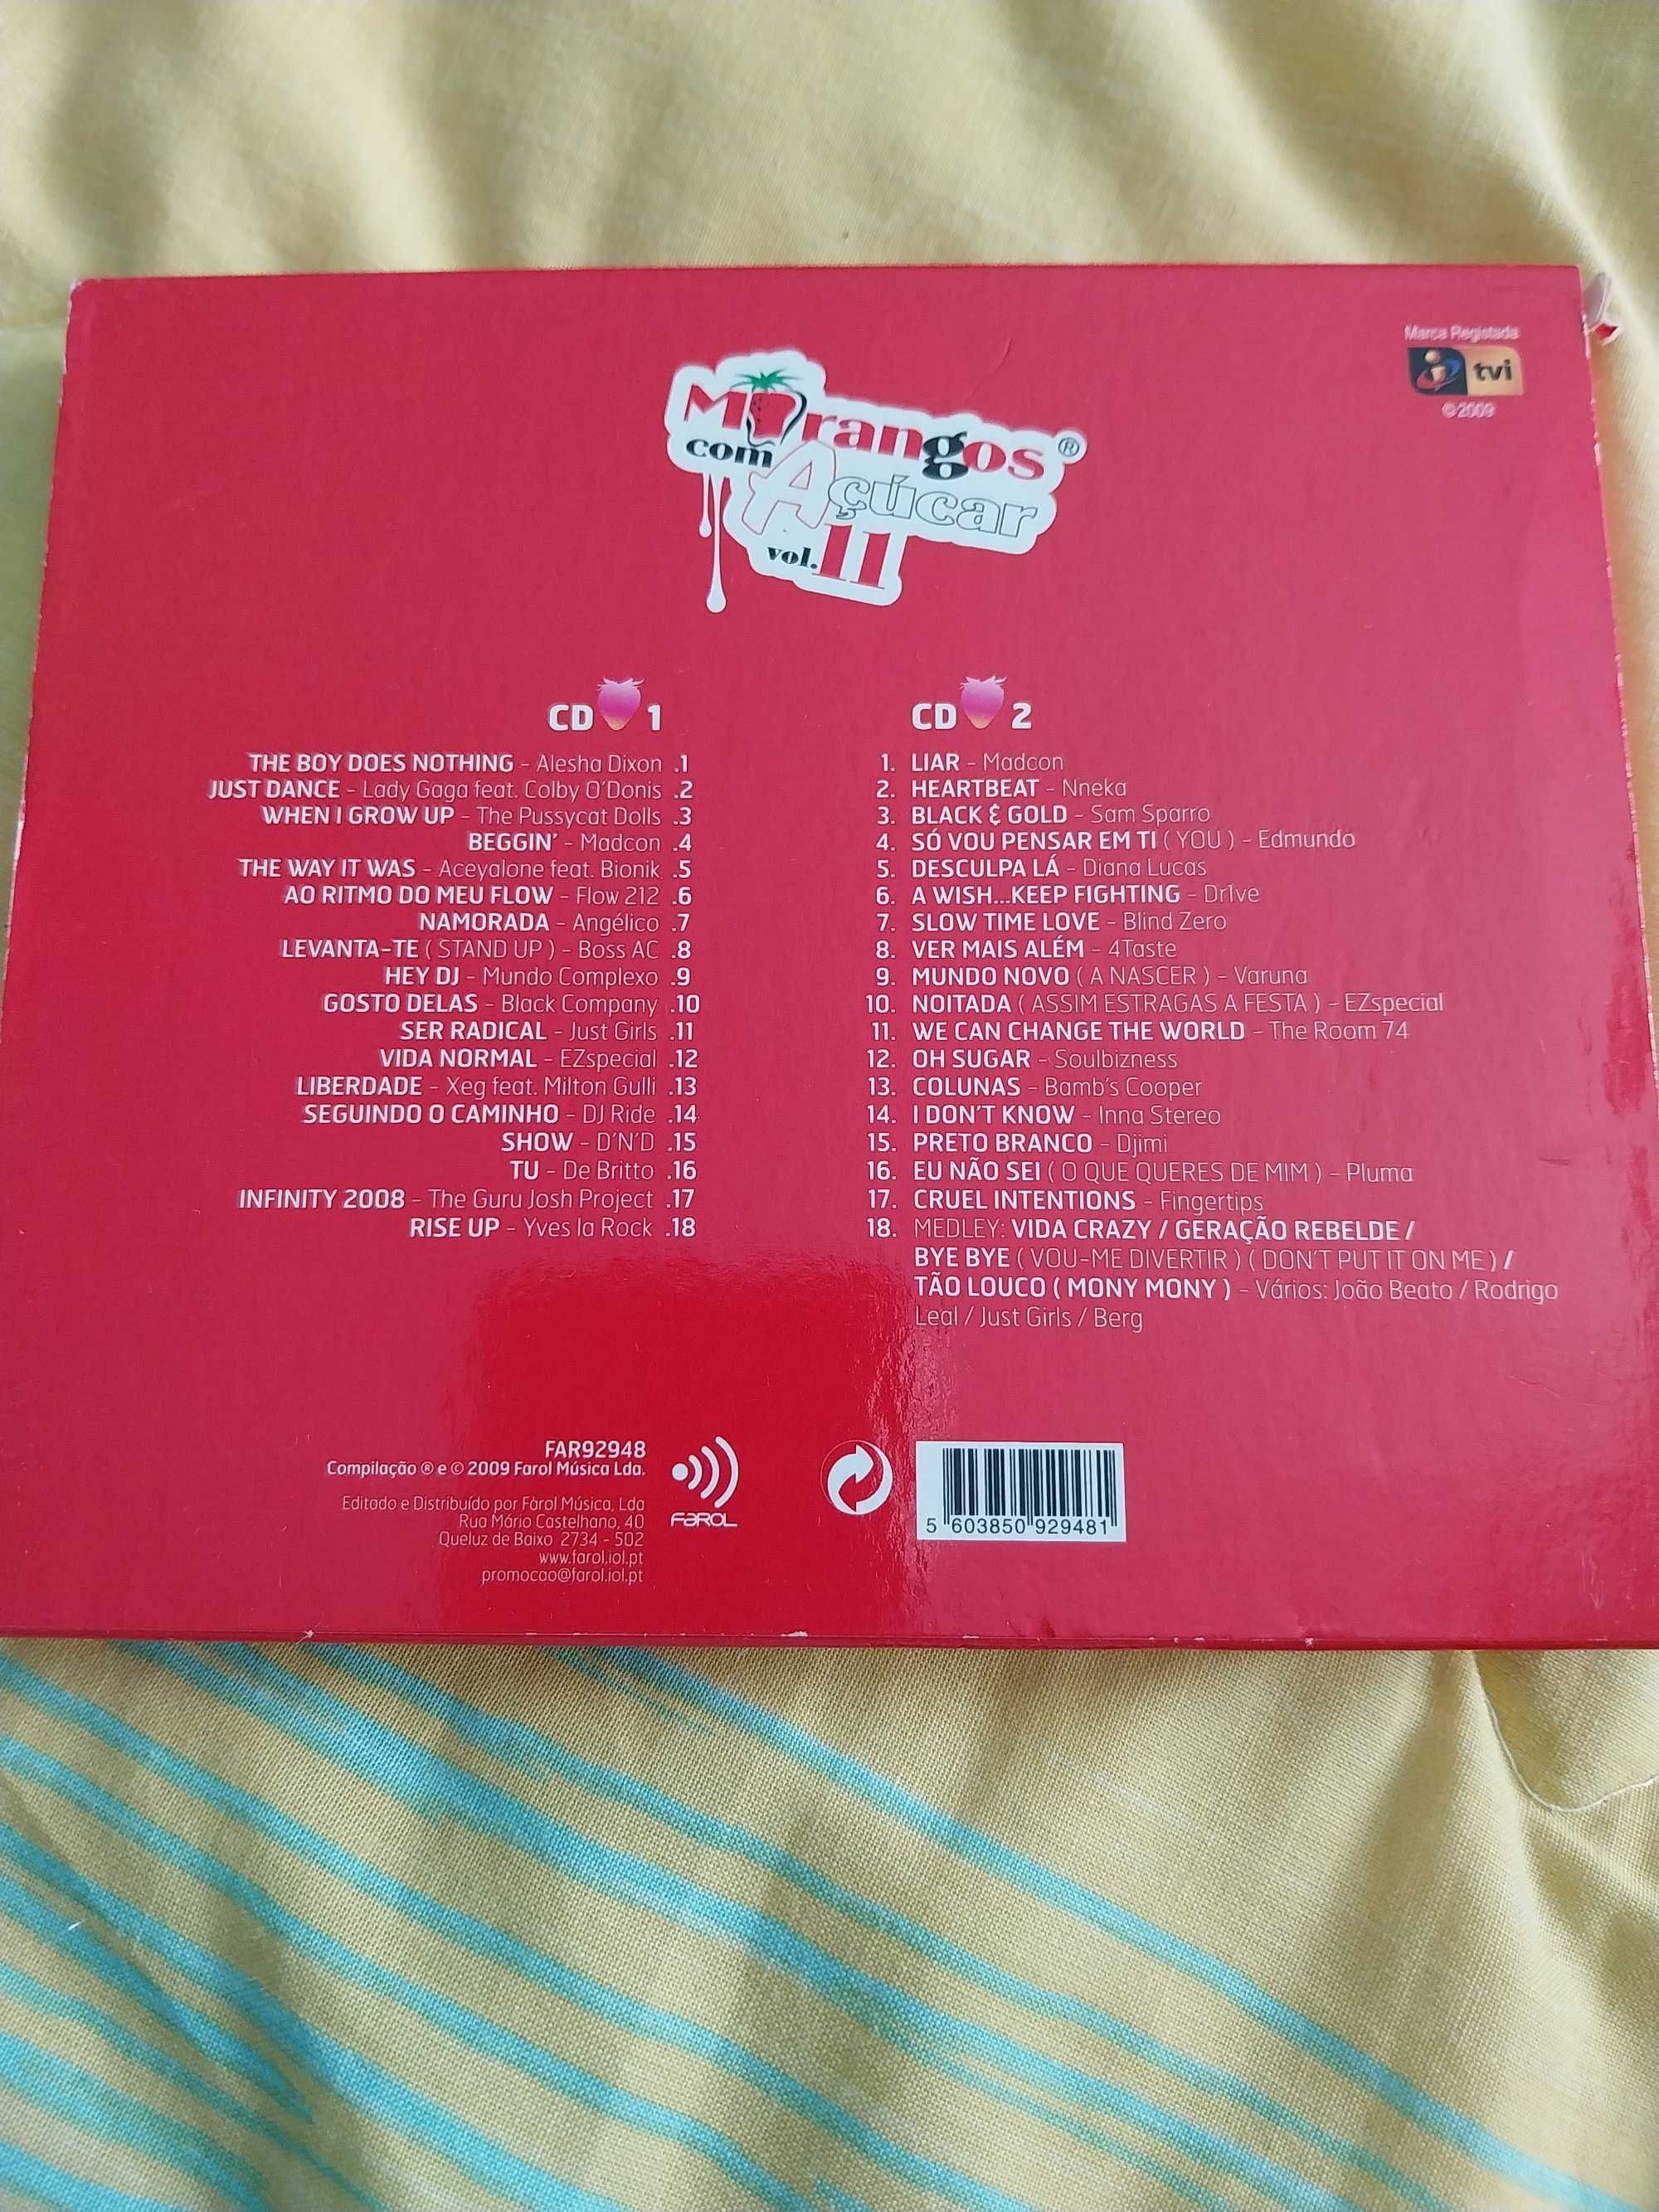 BSO Morangos com Açúcar Vol.11 (2CD)